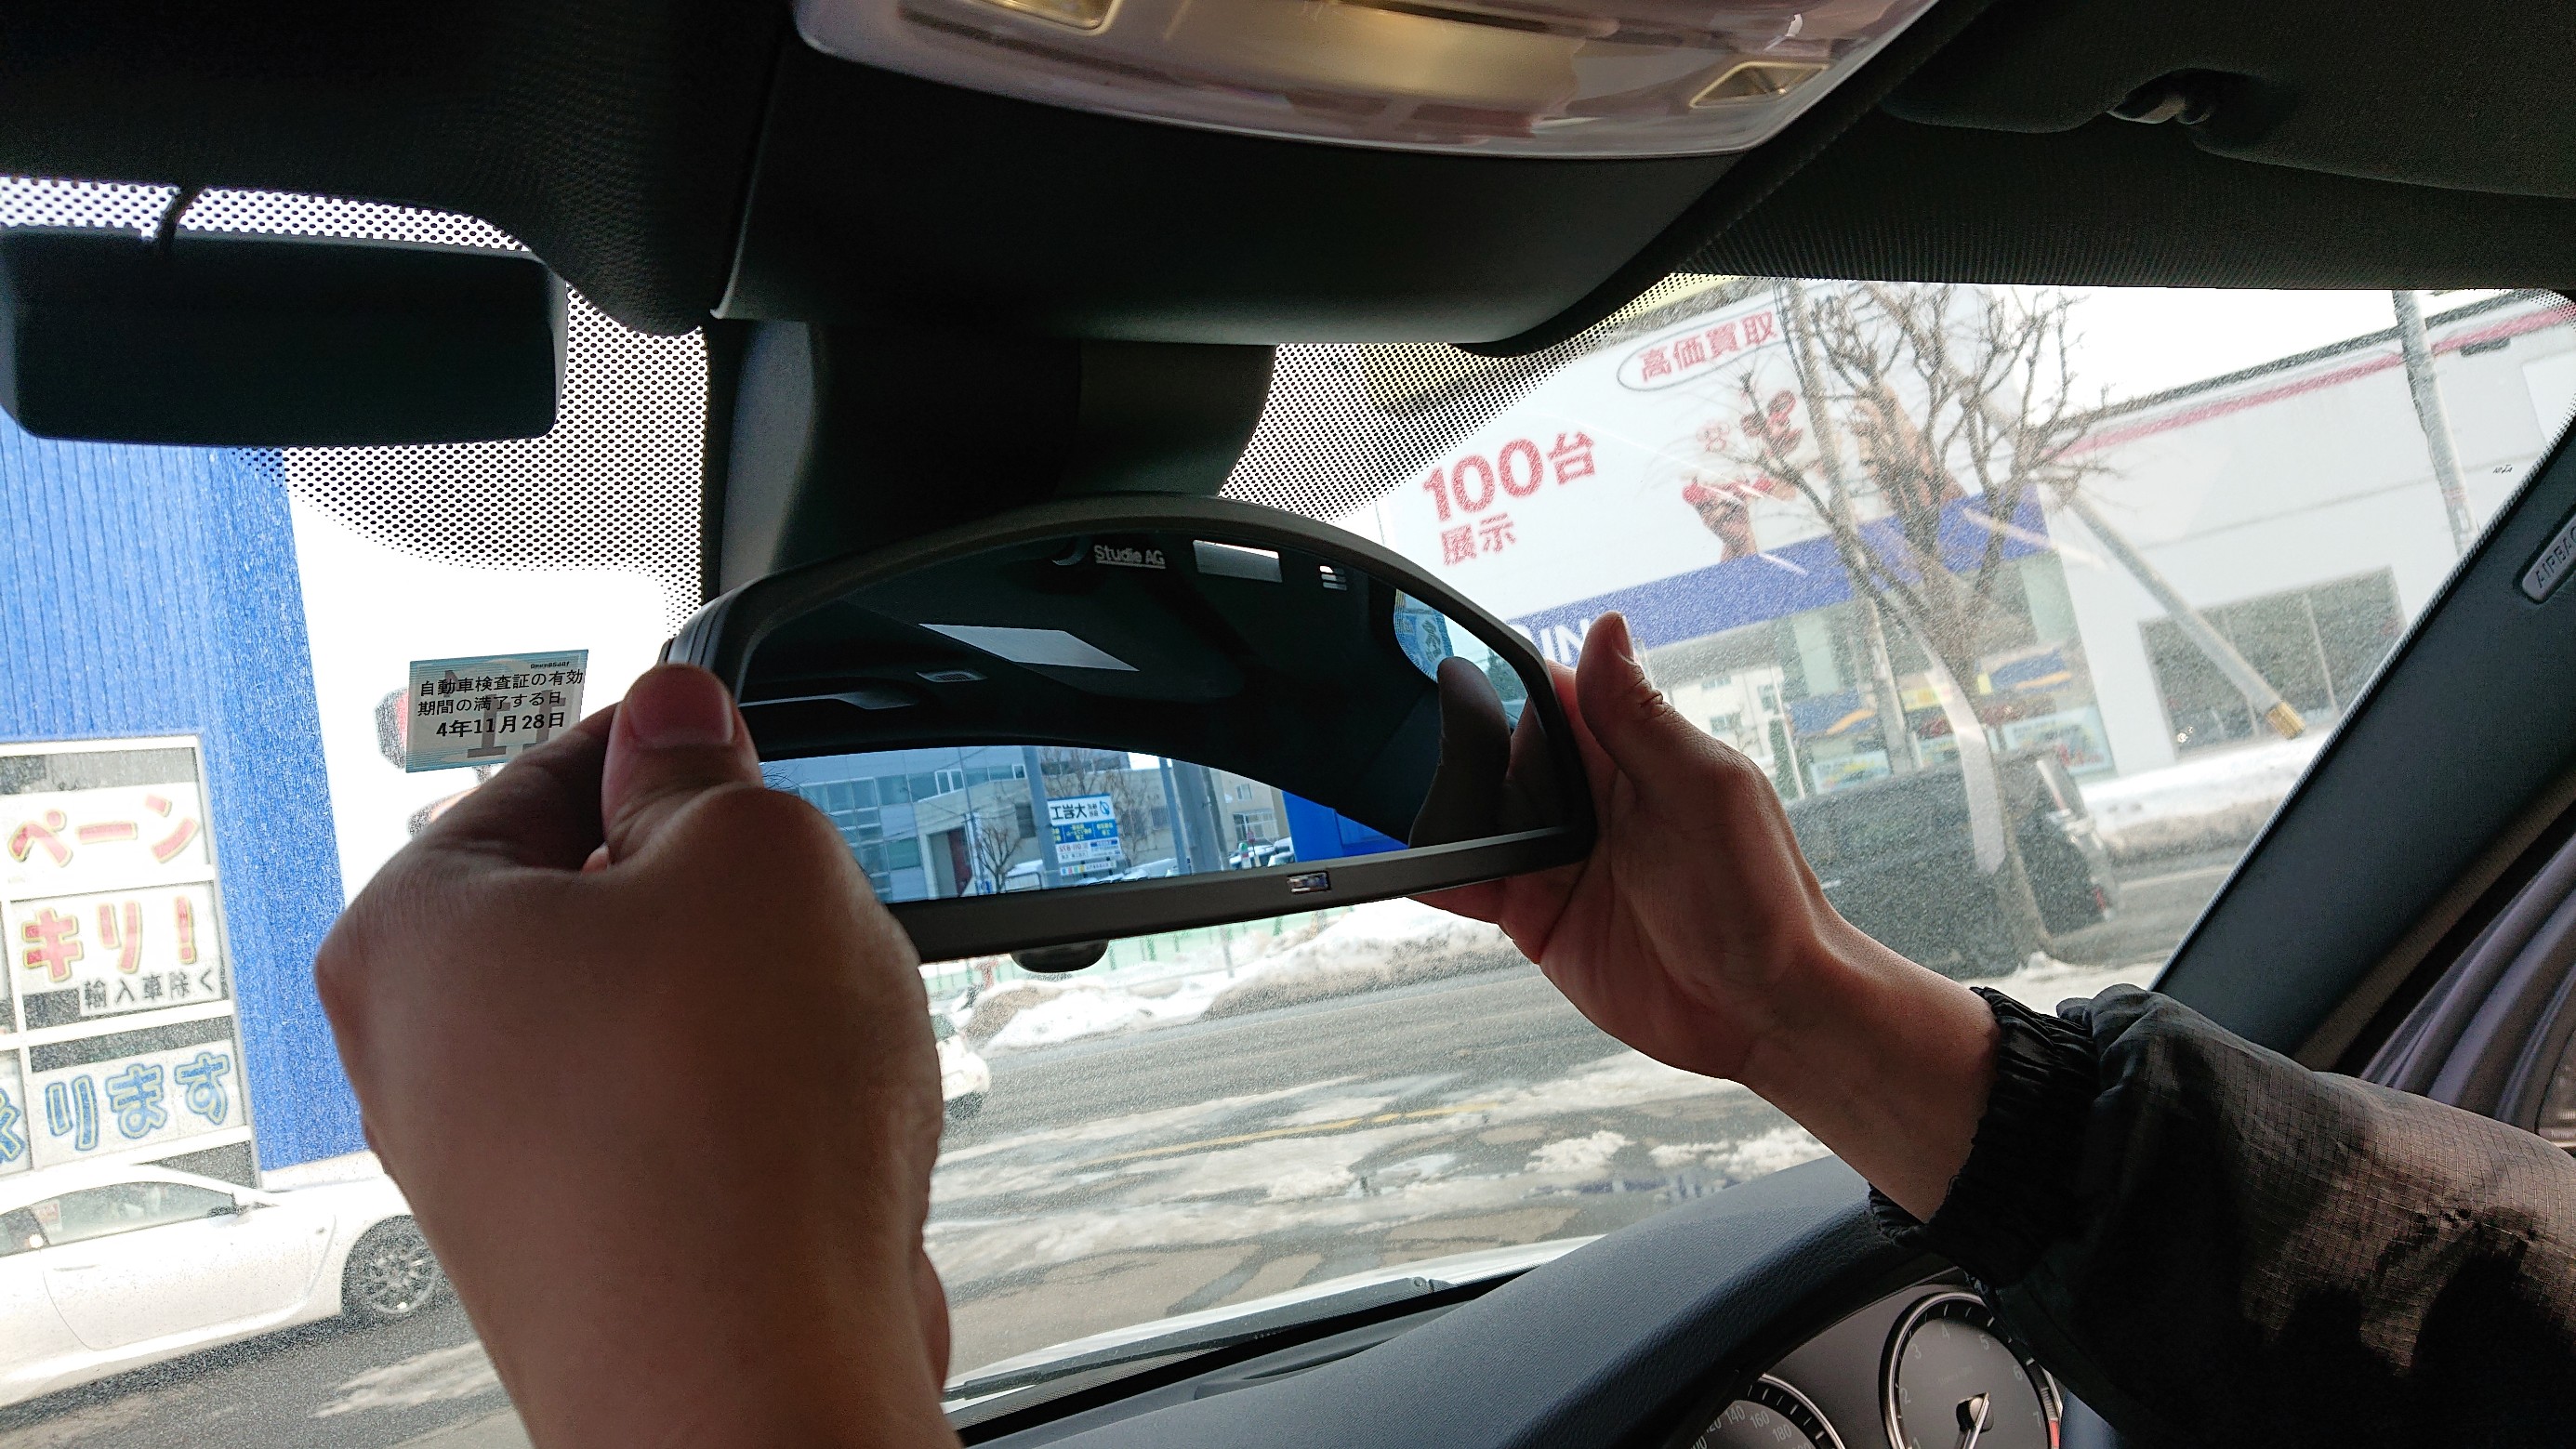 Studie Wide Angle Rear View Mirror Type2 取付 ／ BMW F15 X5 | BMW X5 インテリア |  Feel Book | スタイルコクピット フィール | 車のカスタマイズにかかわるスタッフより